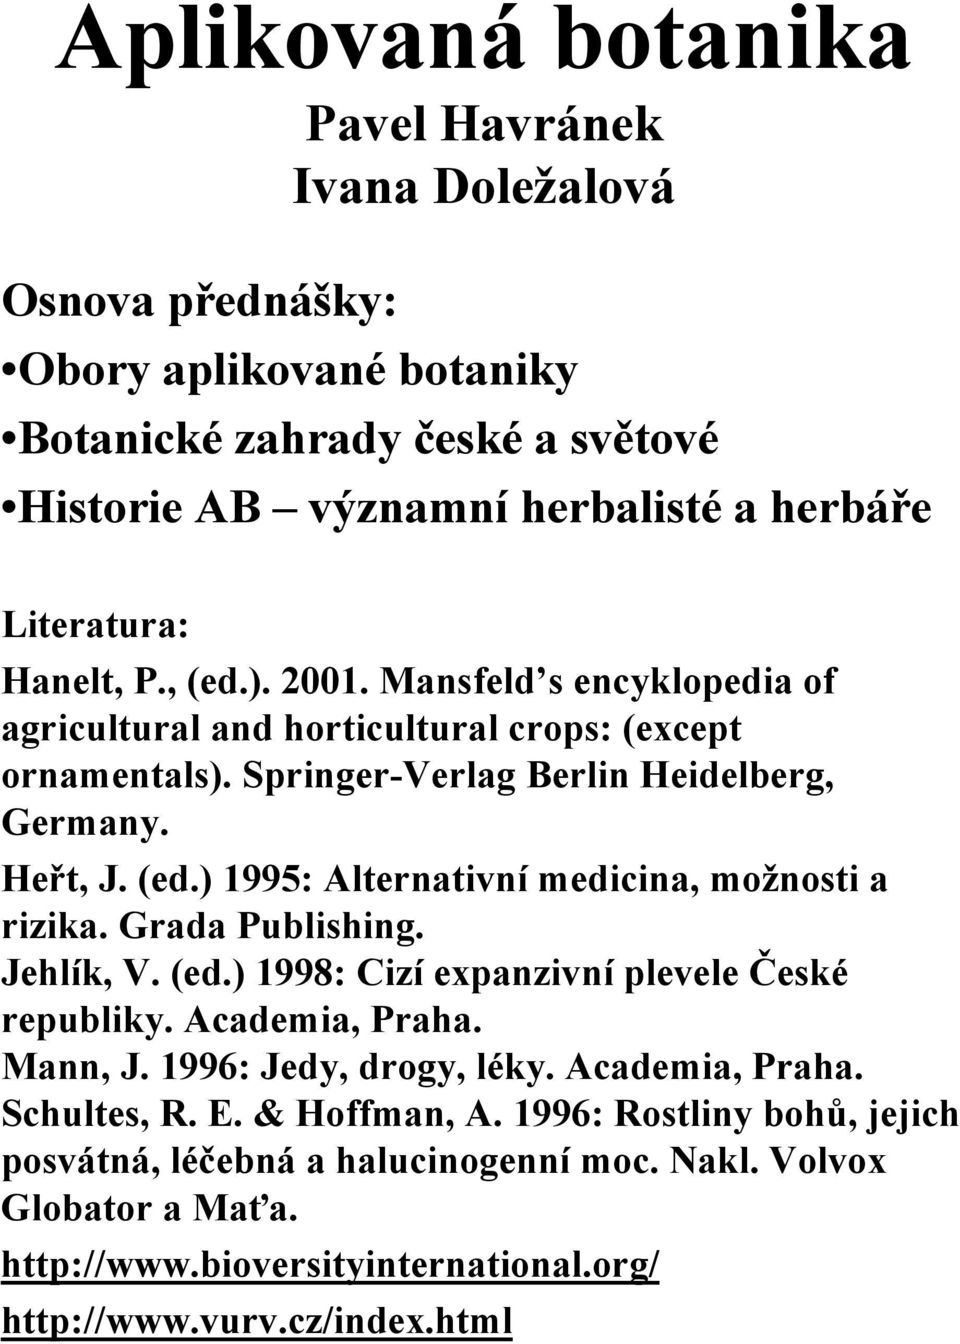 Grada Publishing. Jehlík, V. (ed.) 1998: Cizí expanzivní plevele České republiky. Academia, Praha. Mann, J. 1996: Jedy, drogy, léky. Academia, Praha. Schultes, R. E. & Hoffman, A.